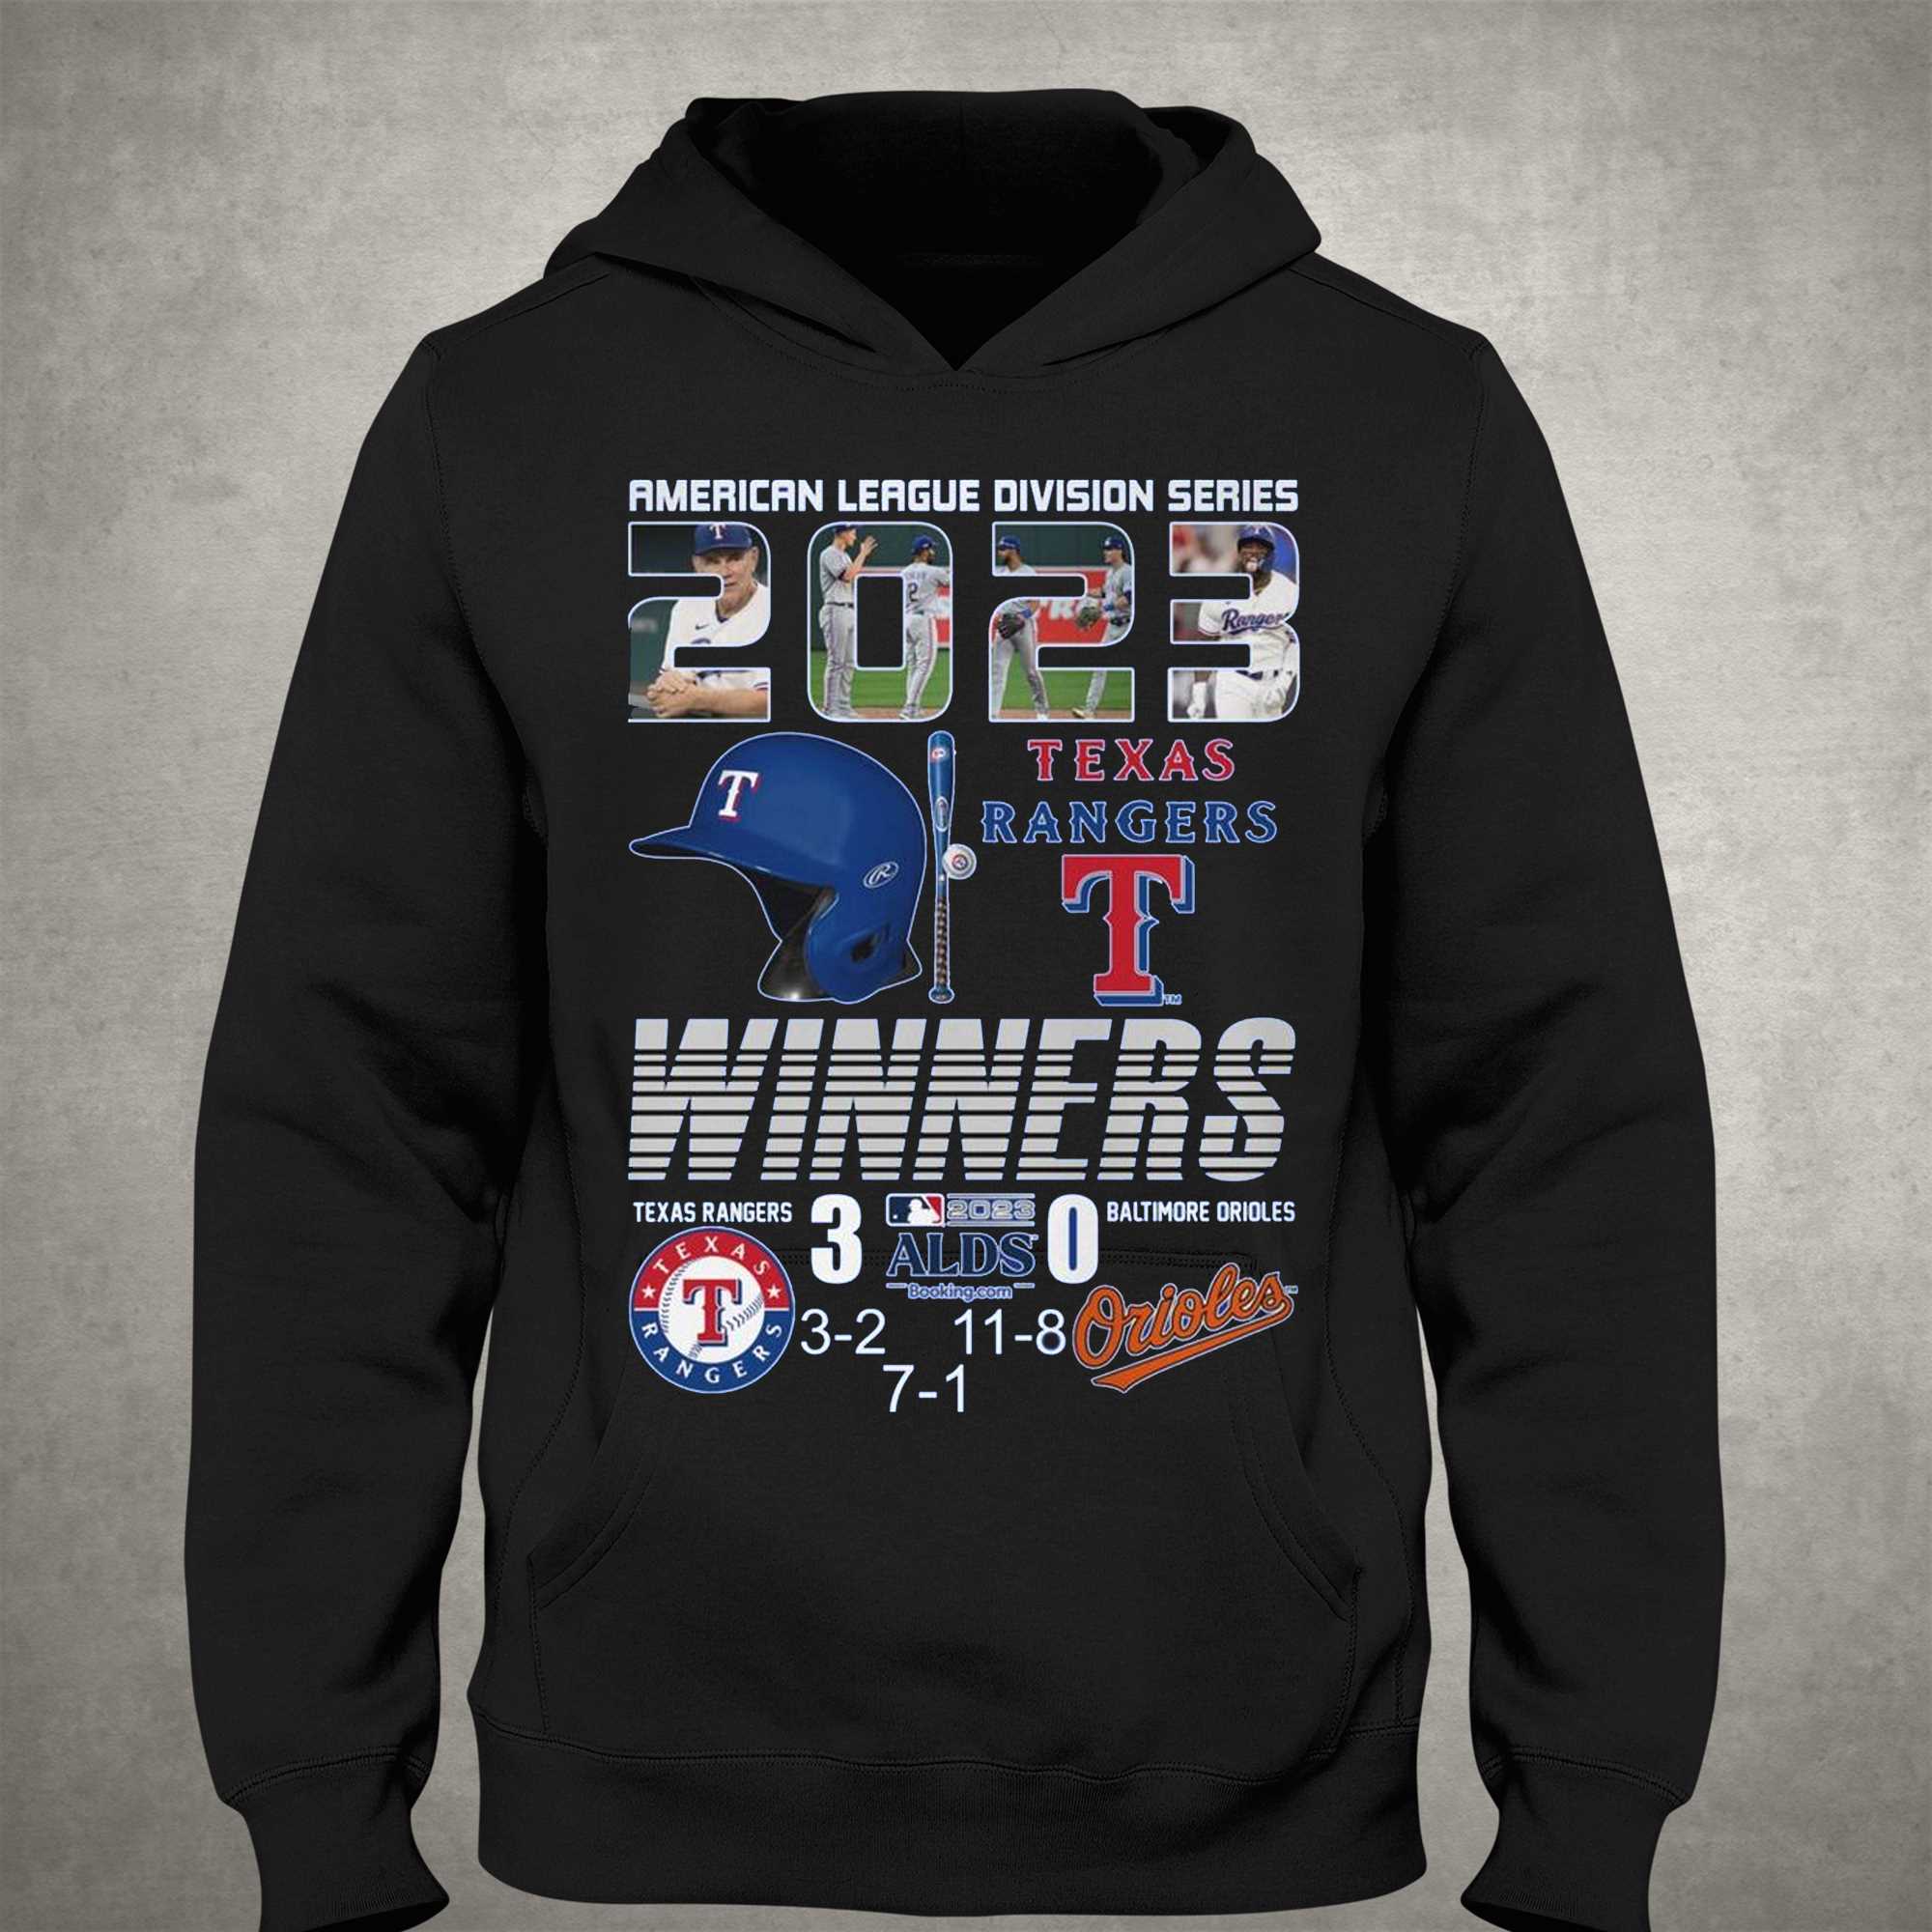 American League Division Series 2023 Texas Rangers Winners 3 – Baltimore  Orioles 0 T-shirt - Shibtee Clothing